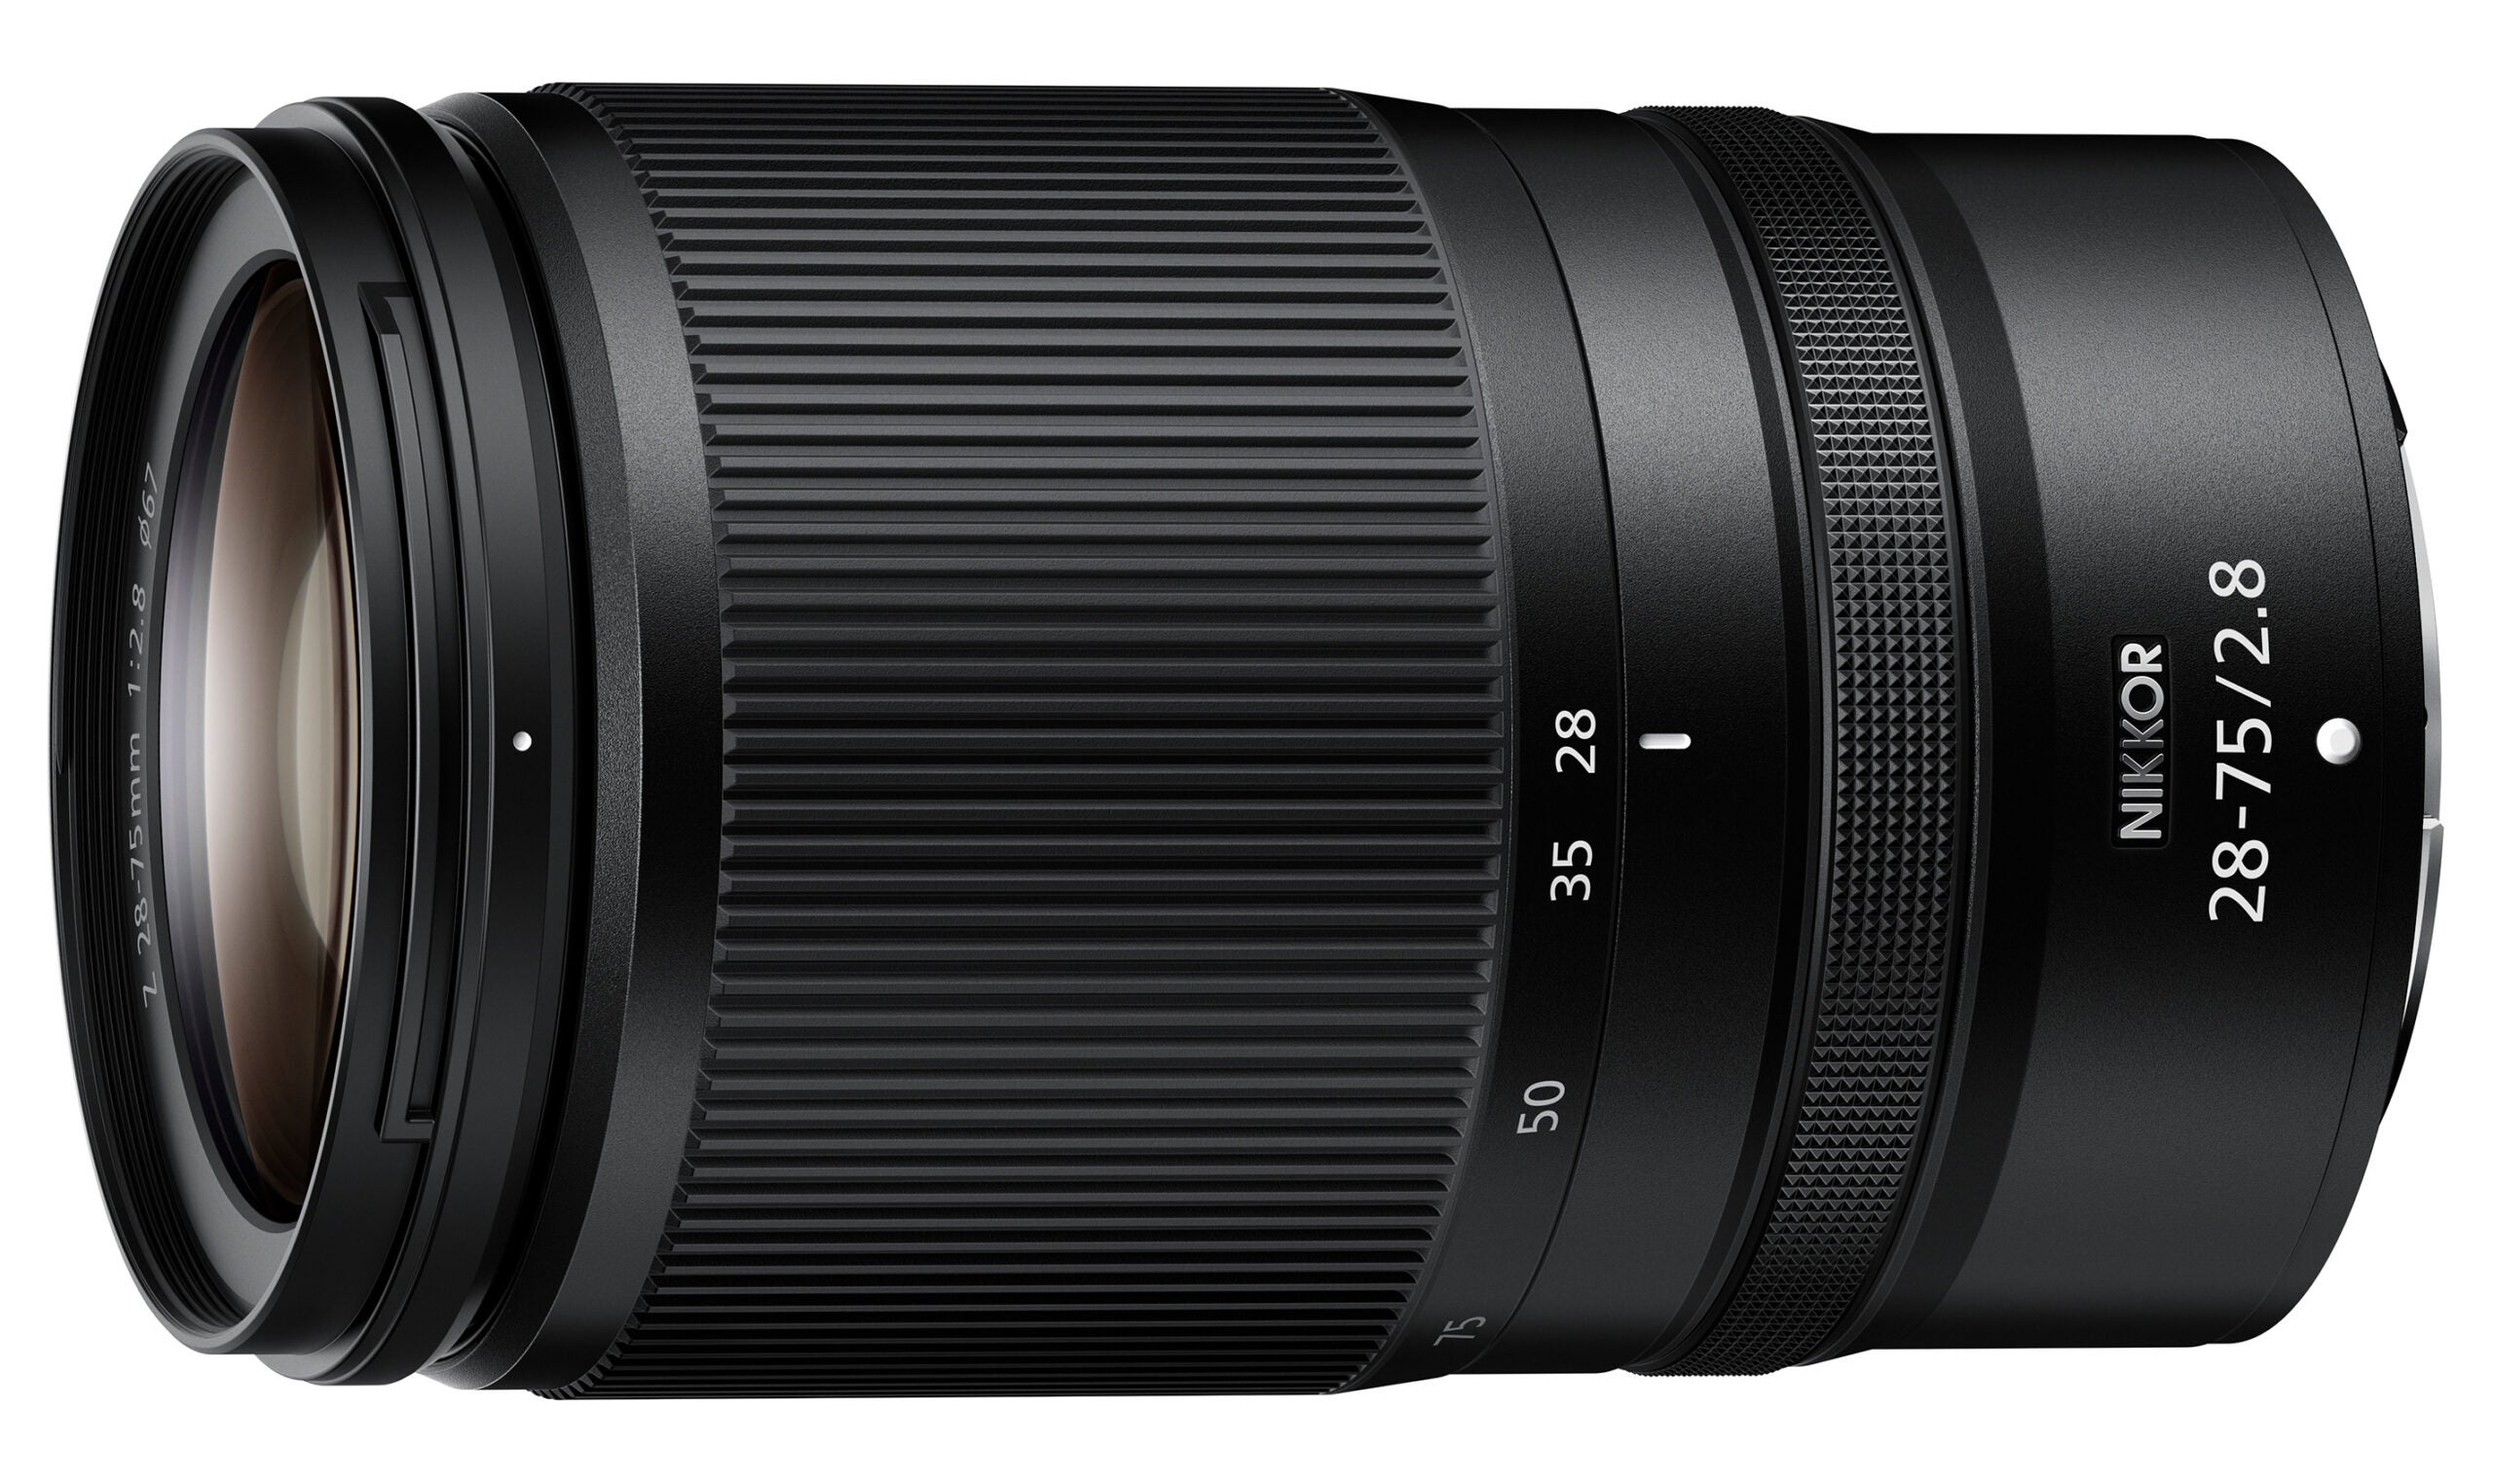 The new Nikon Z 28-75mm f/2.8 lens